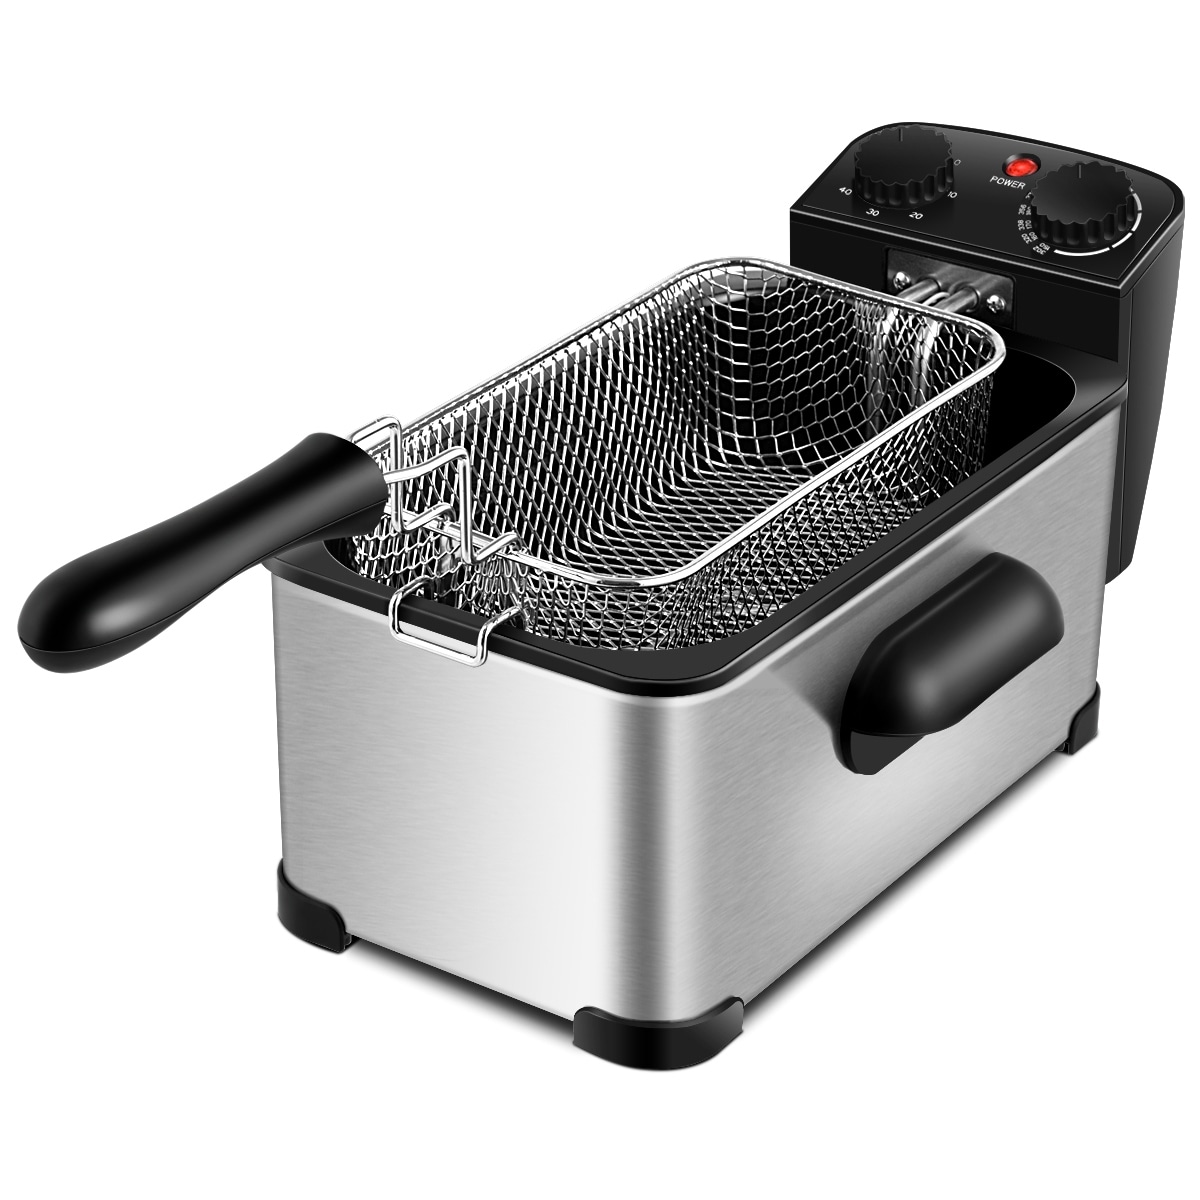  Presto DualDaddy 8-Cup Electric Deep Fryer: Deep Fryer  Nonstick: Home & Kitchen